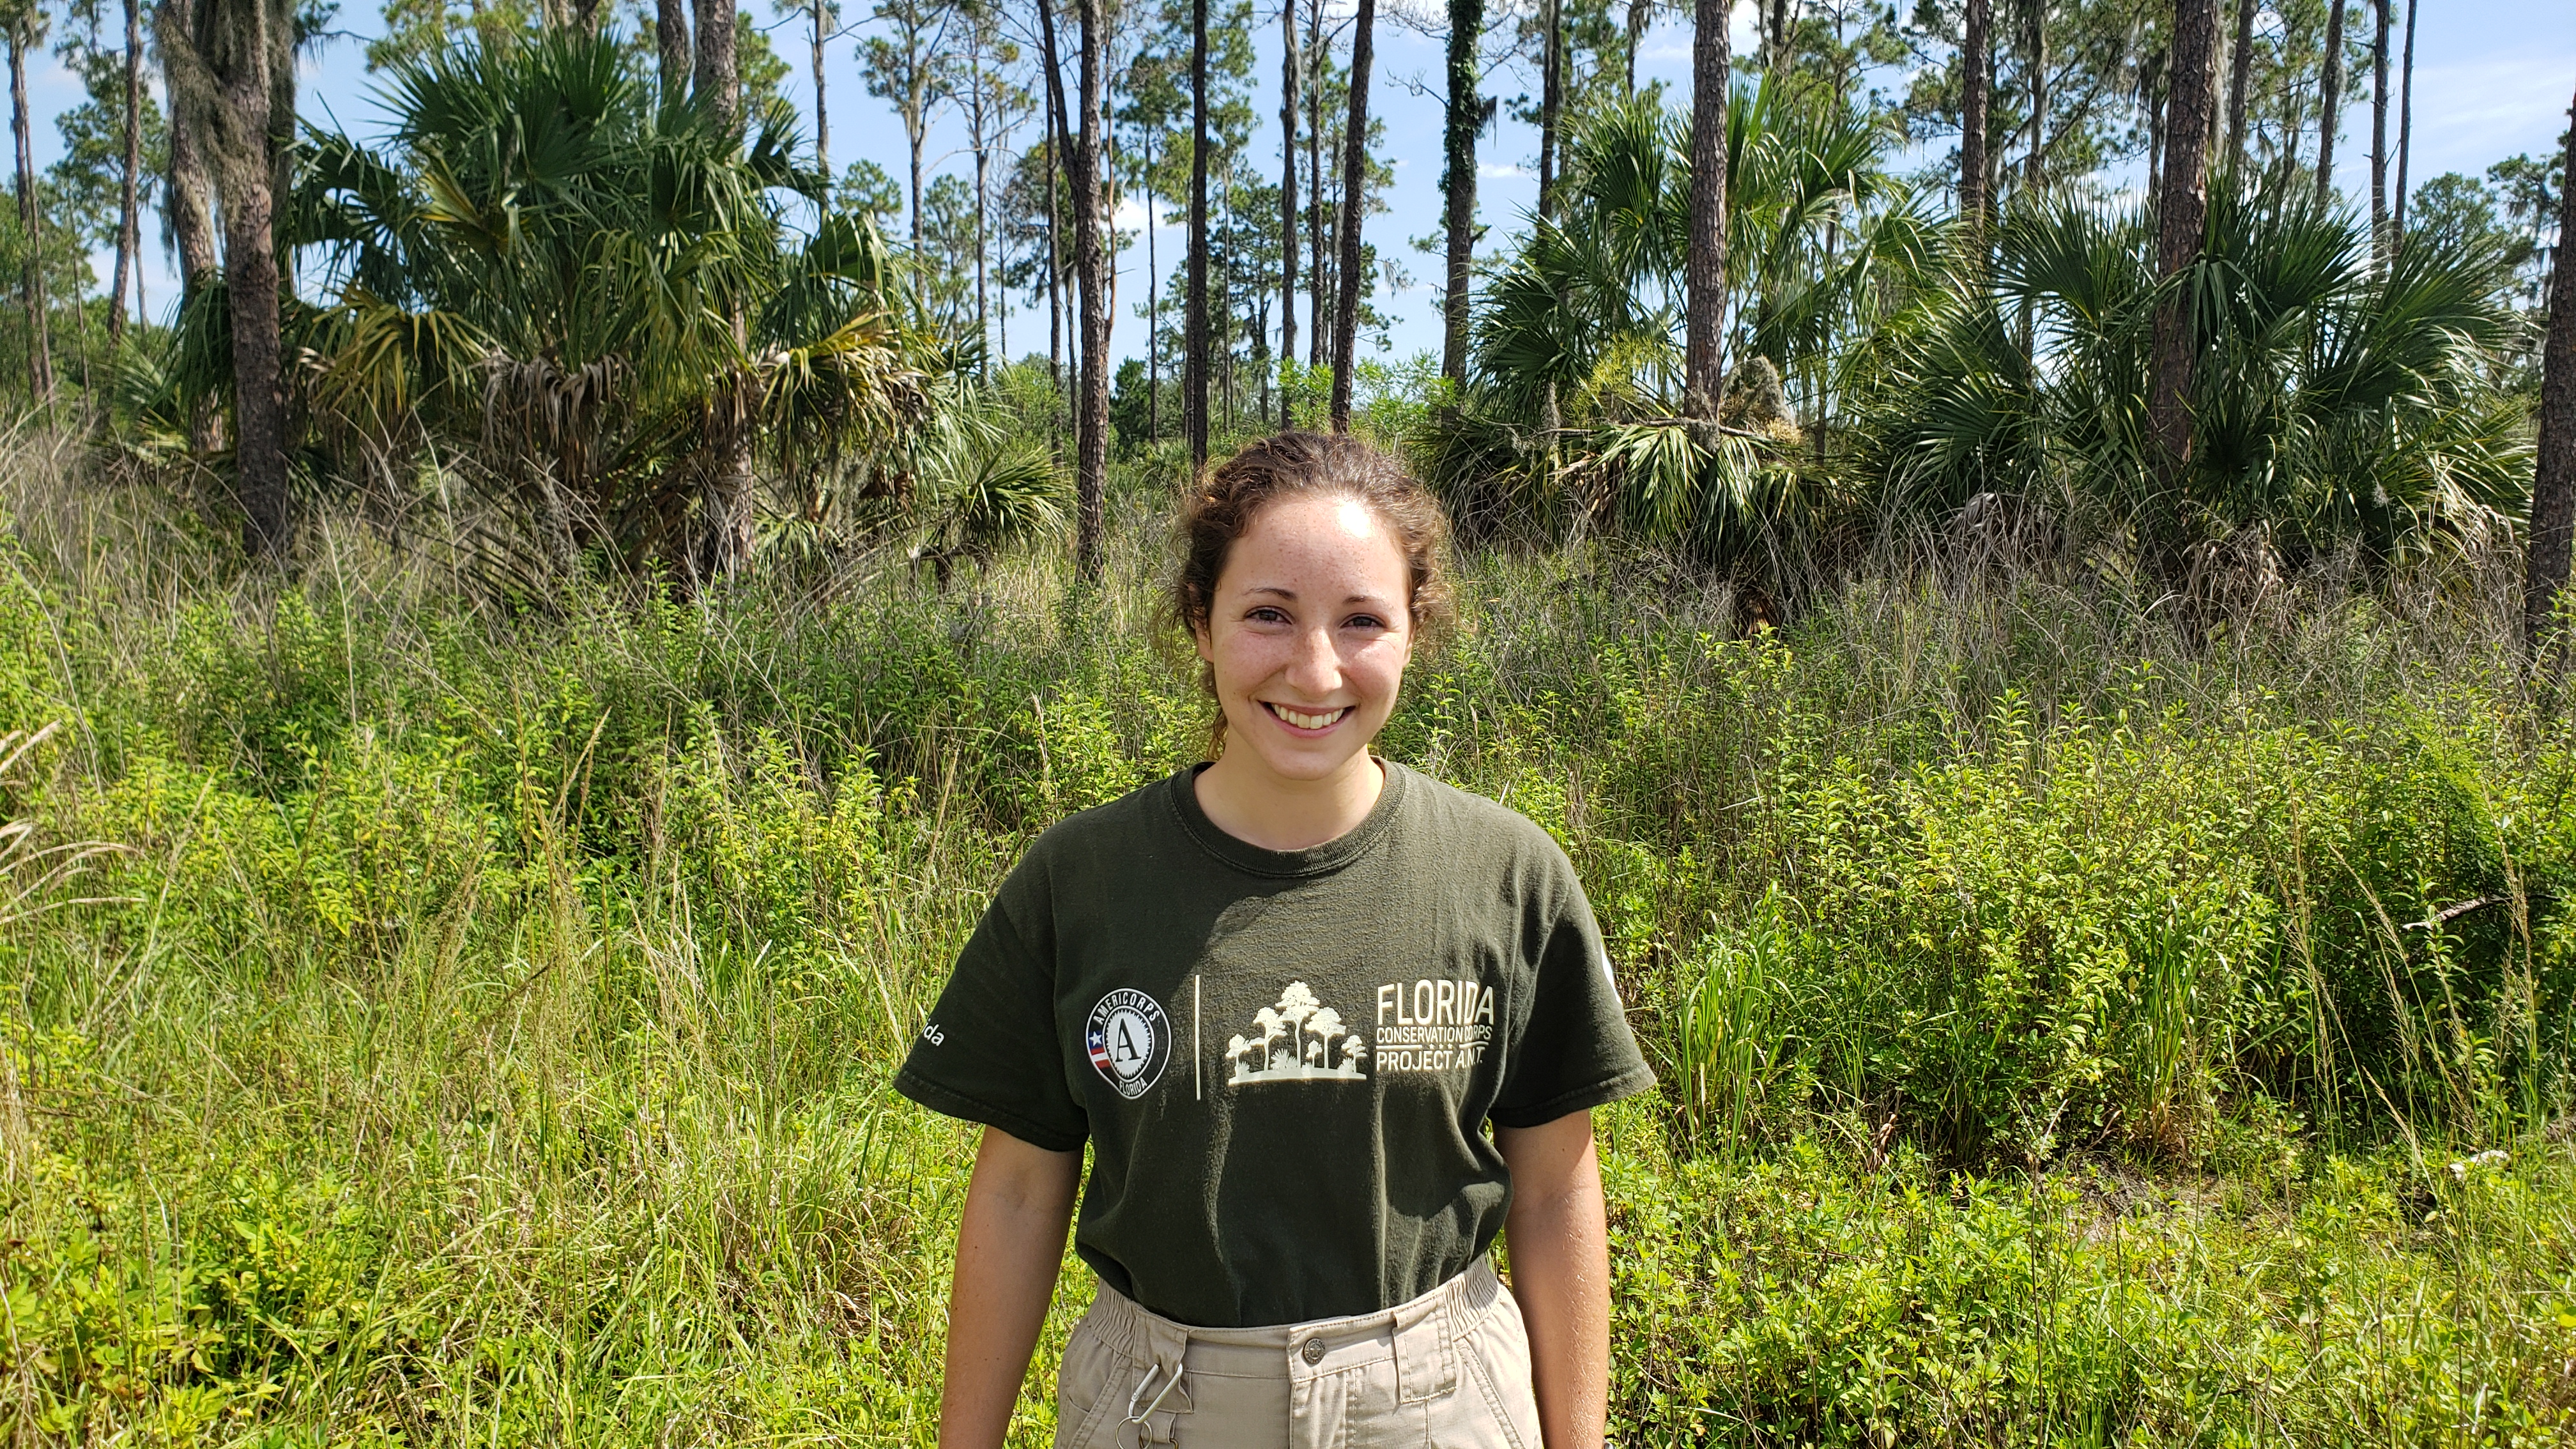 Florida Conservation Corps member, Josephine Werni